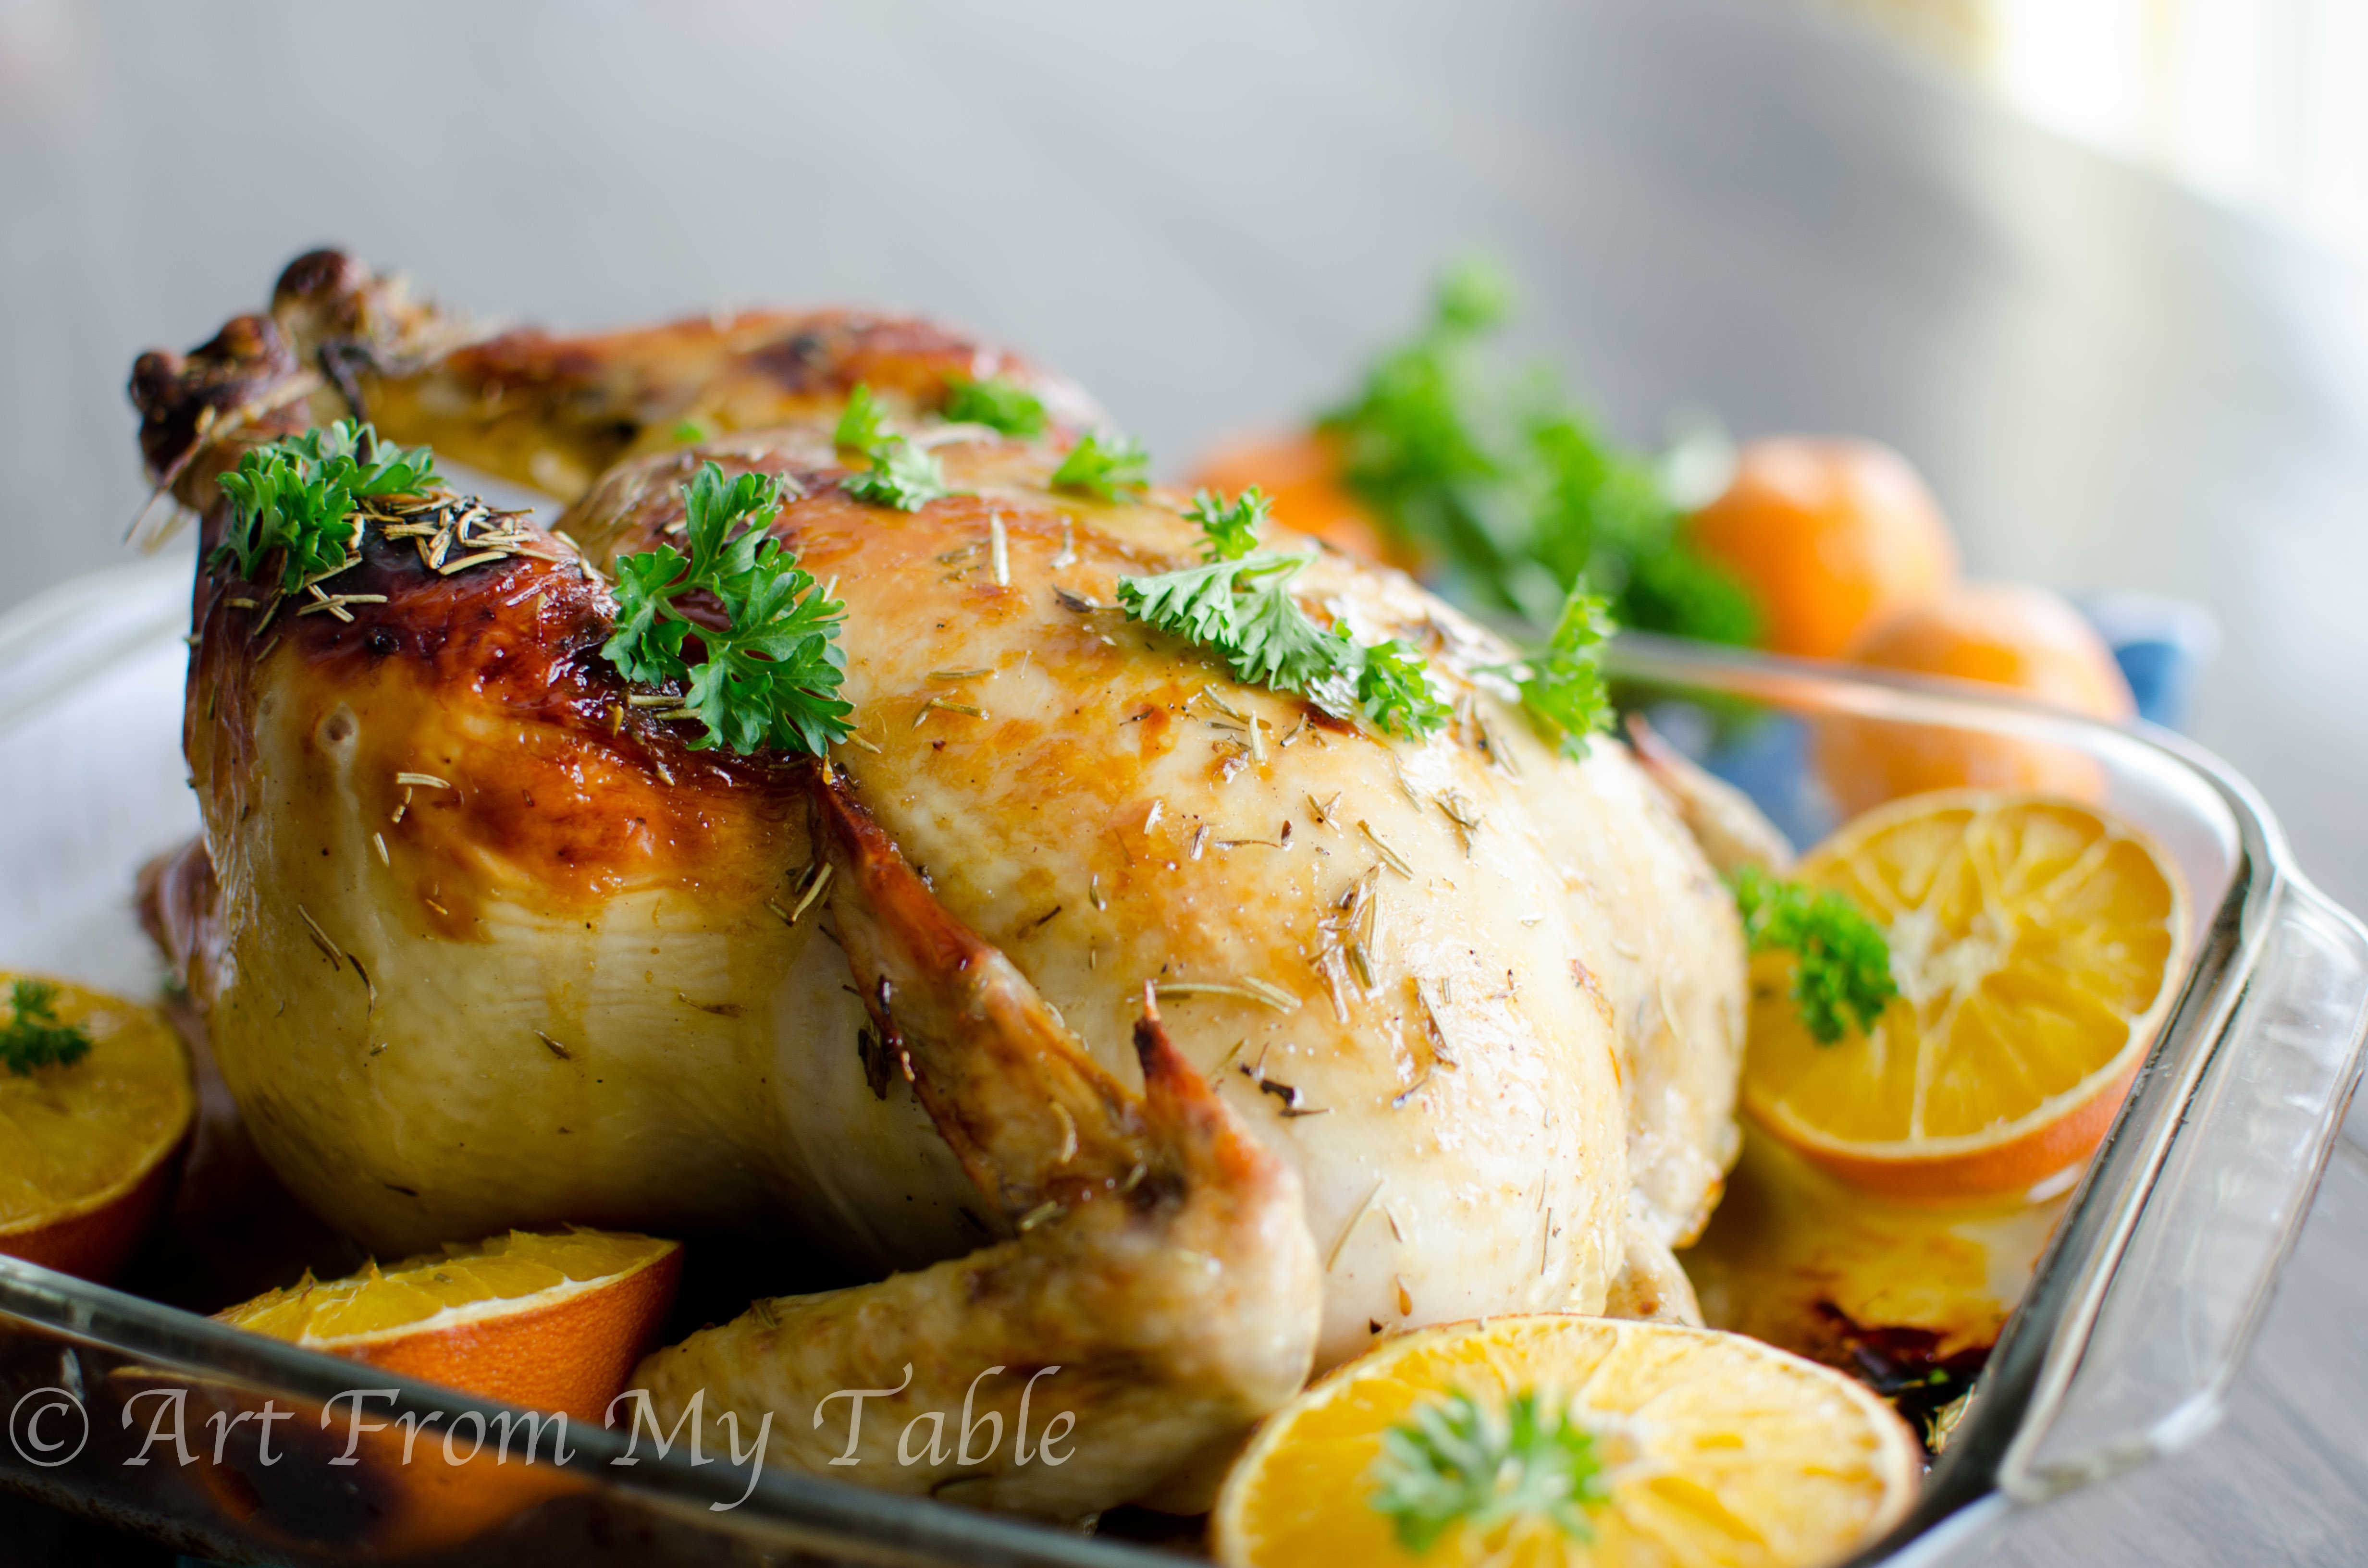 Easy roasted chicken with orange glaze garnished with fresh parsley. 